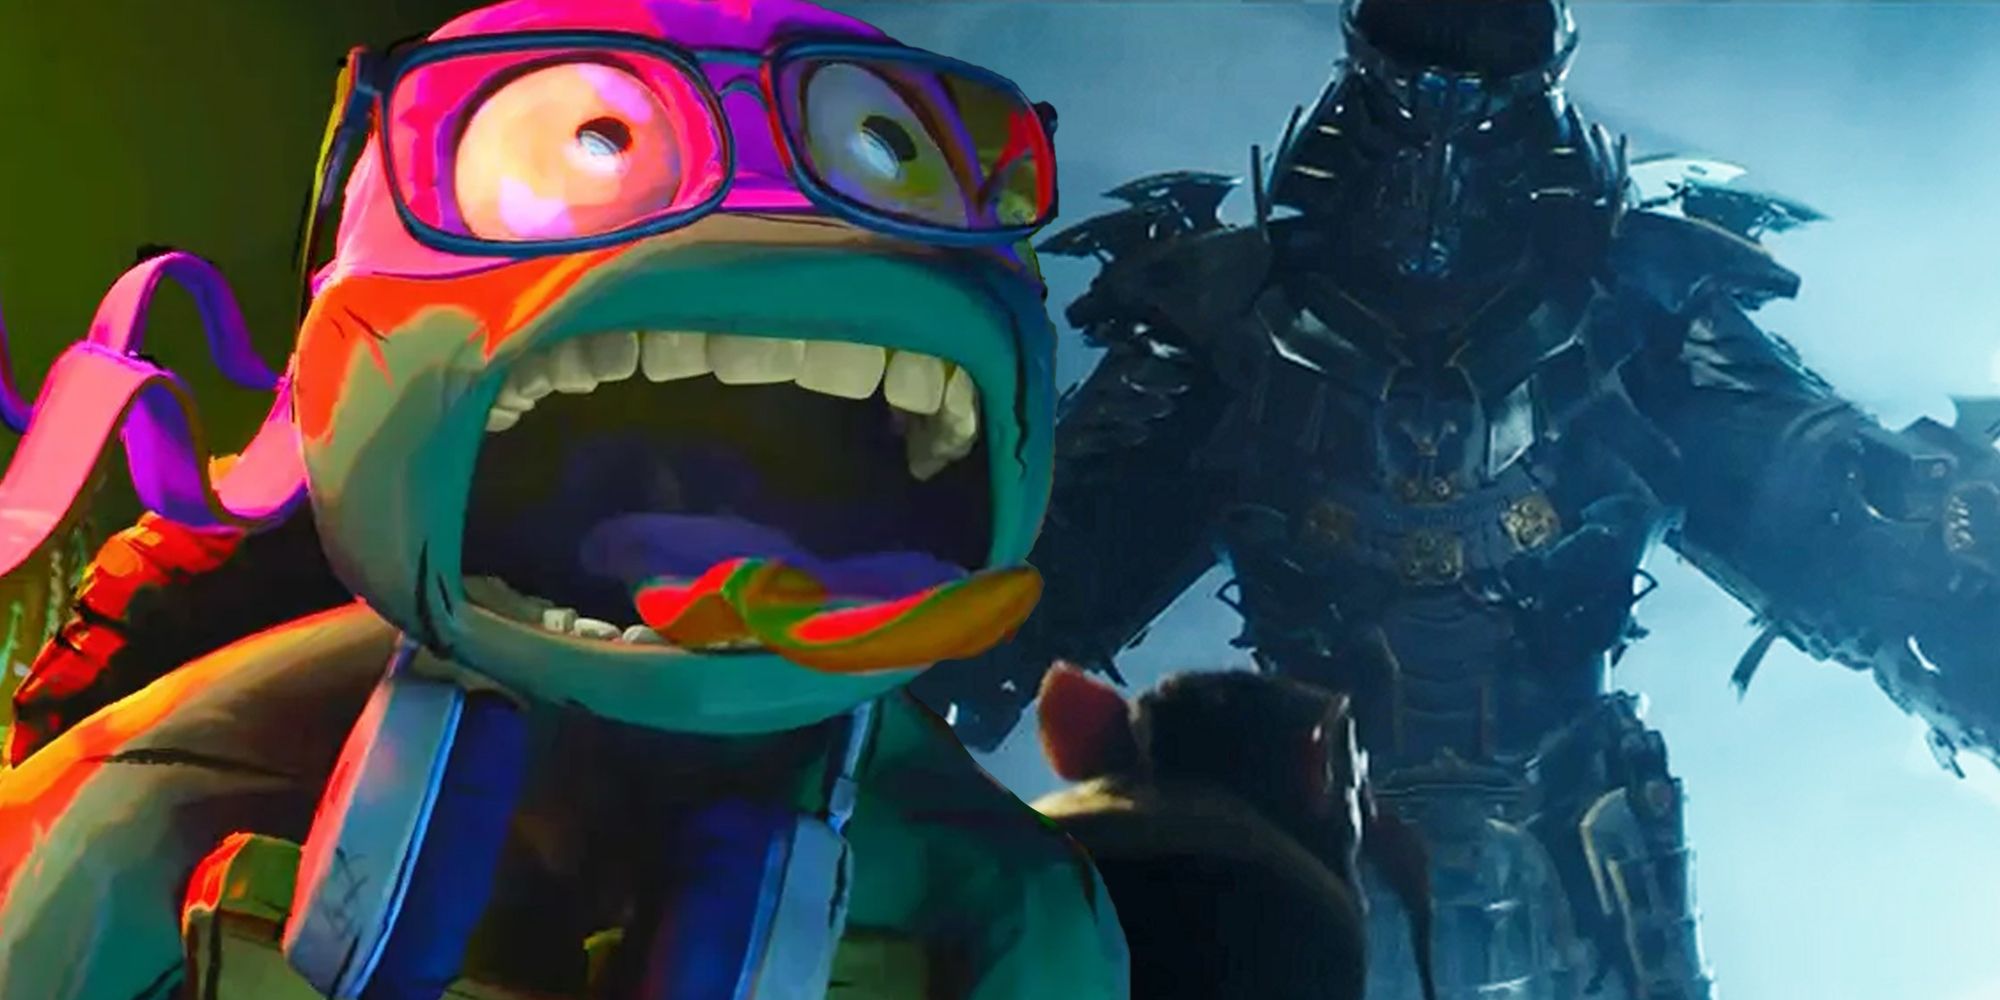 Why Isn't Shredder in Teenage Mutant Ninja Turtles Mutant Mayhem?